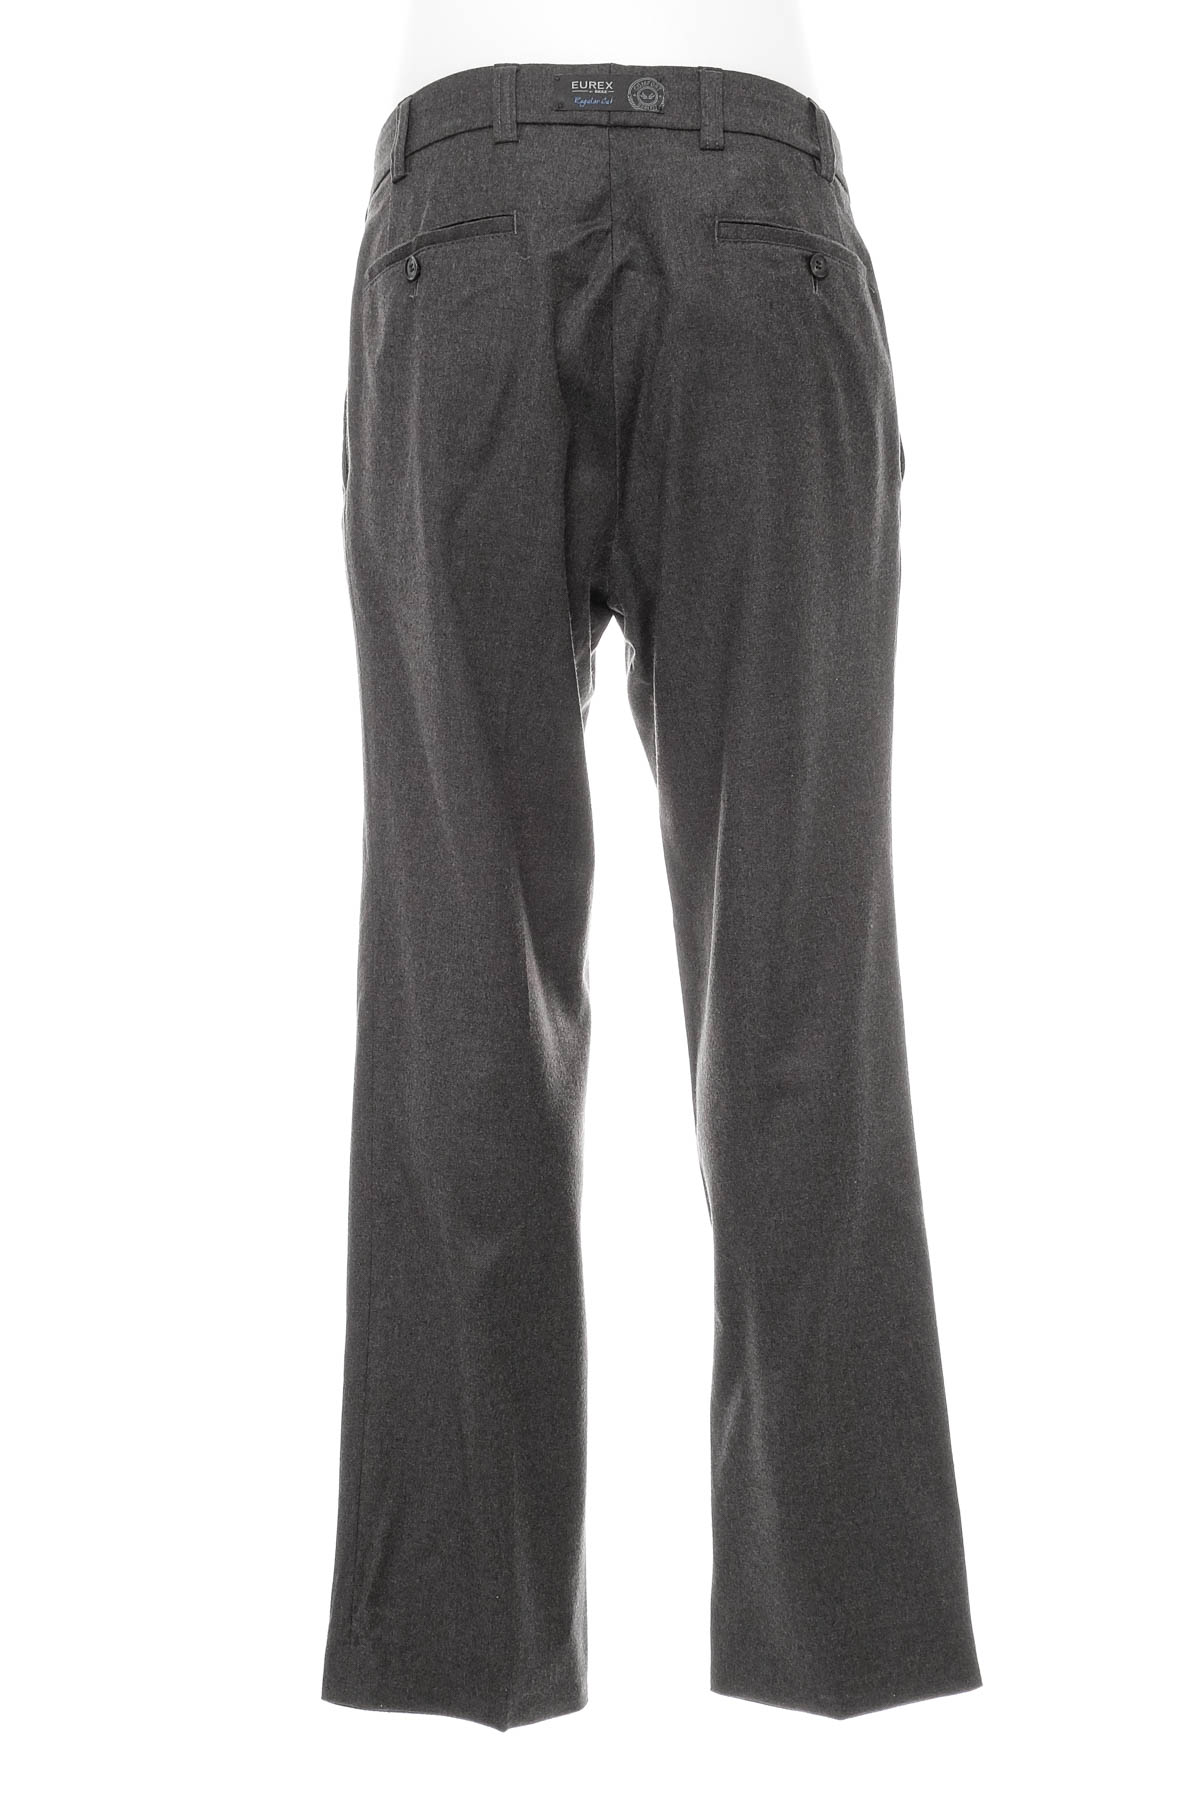 Pantalon pentru bărbați - EUREX BY BRAX - 1